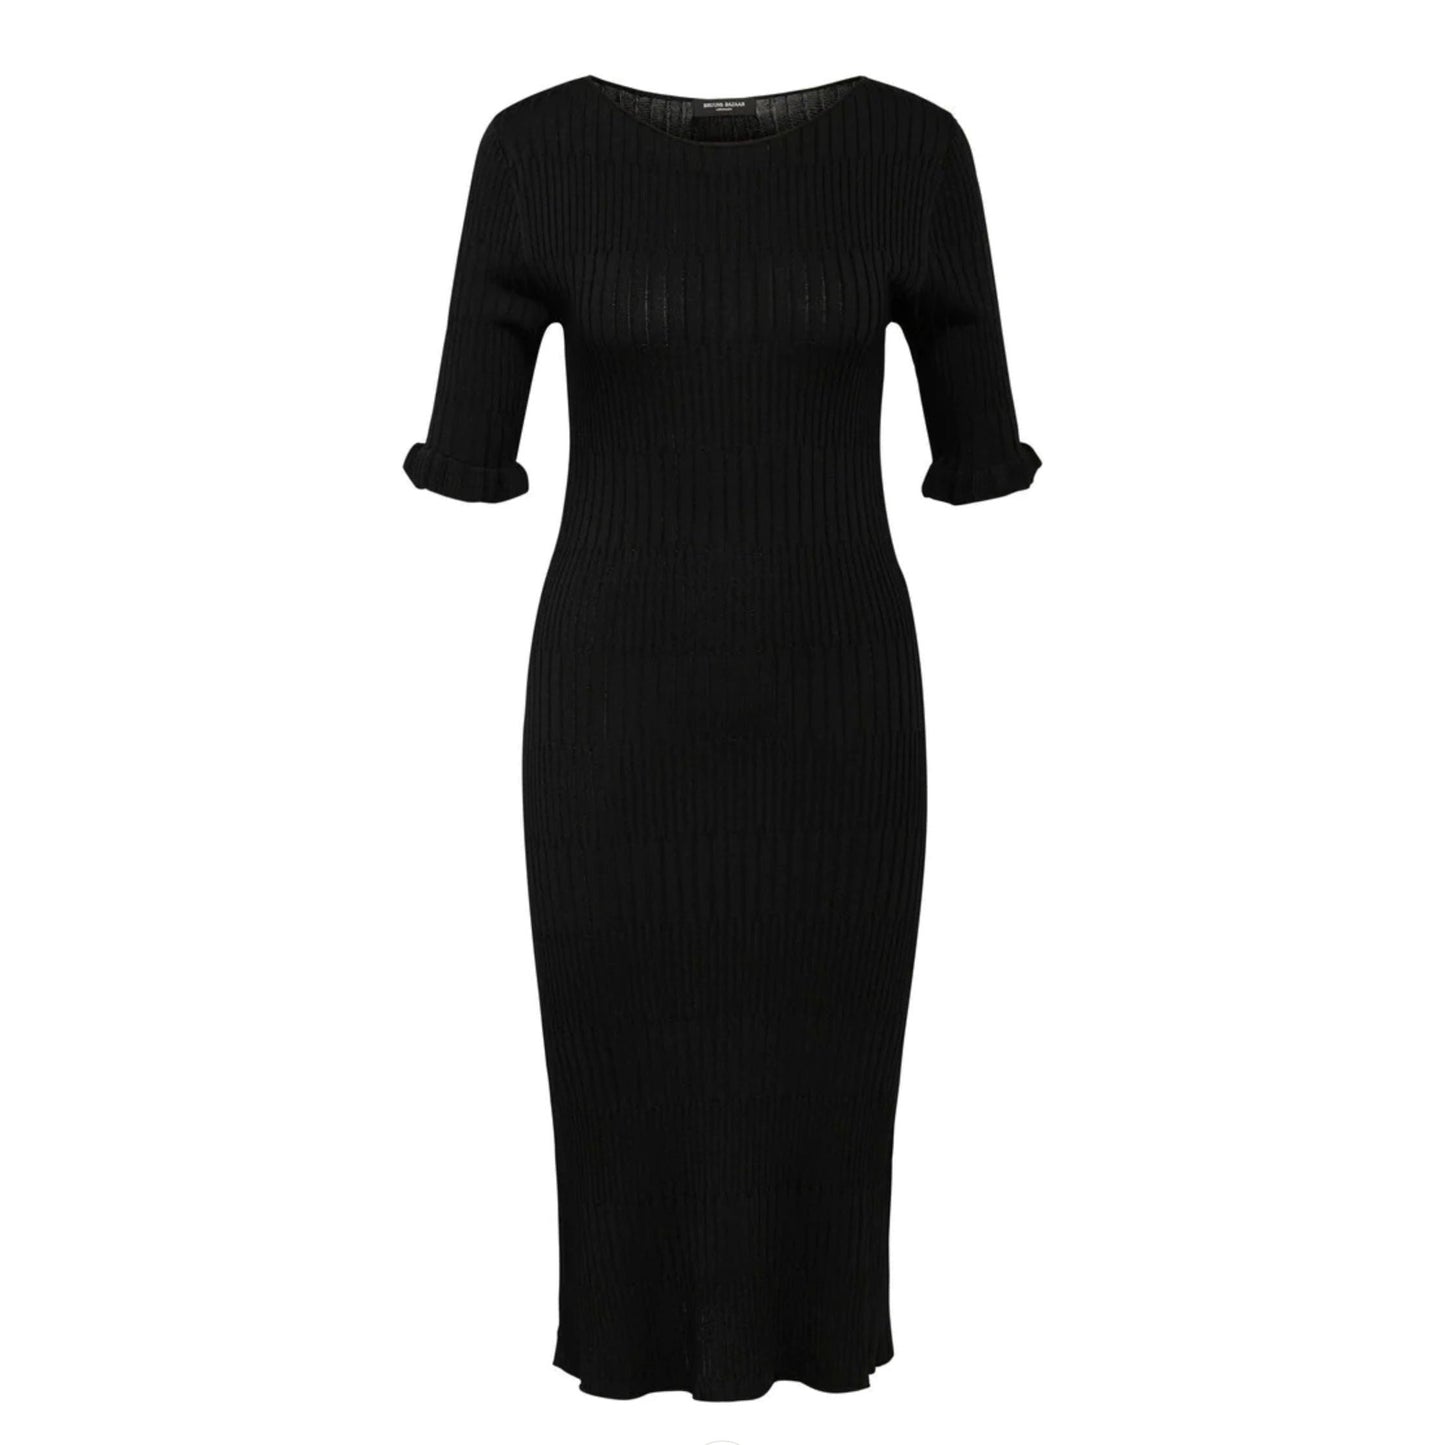 Bruuns Bazaar - Rivers llene knit dress - Black